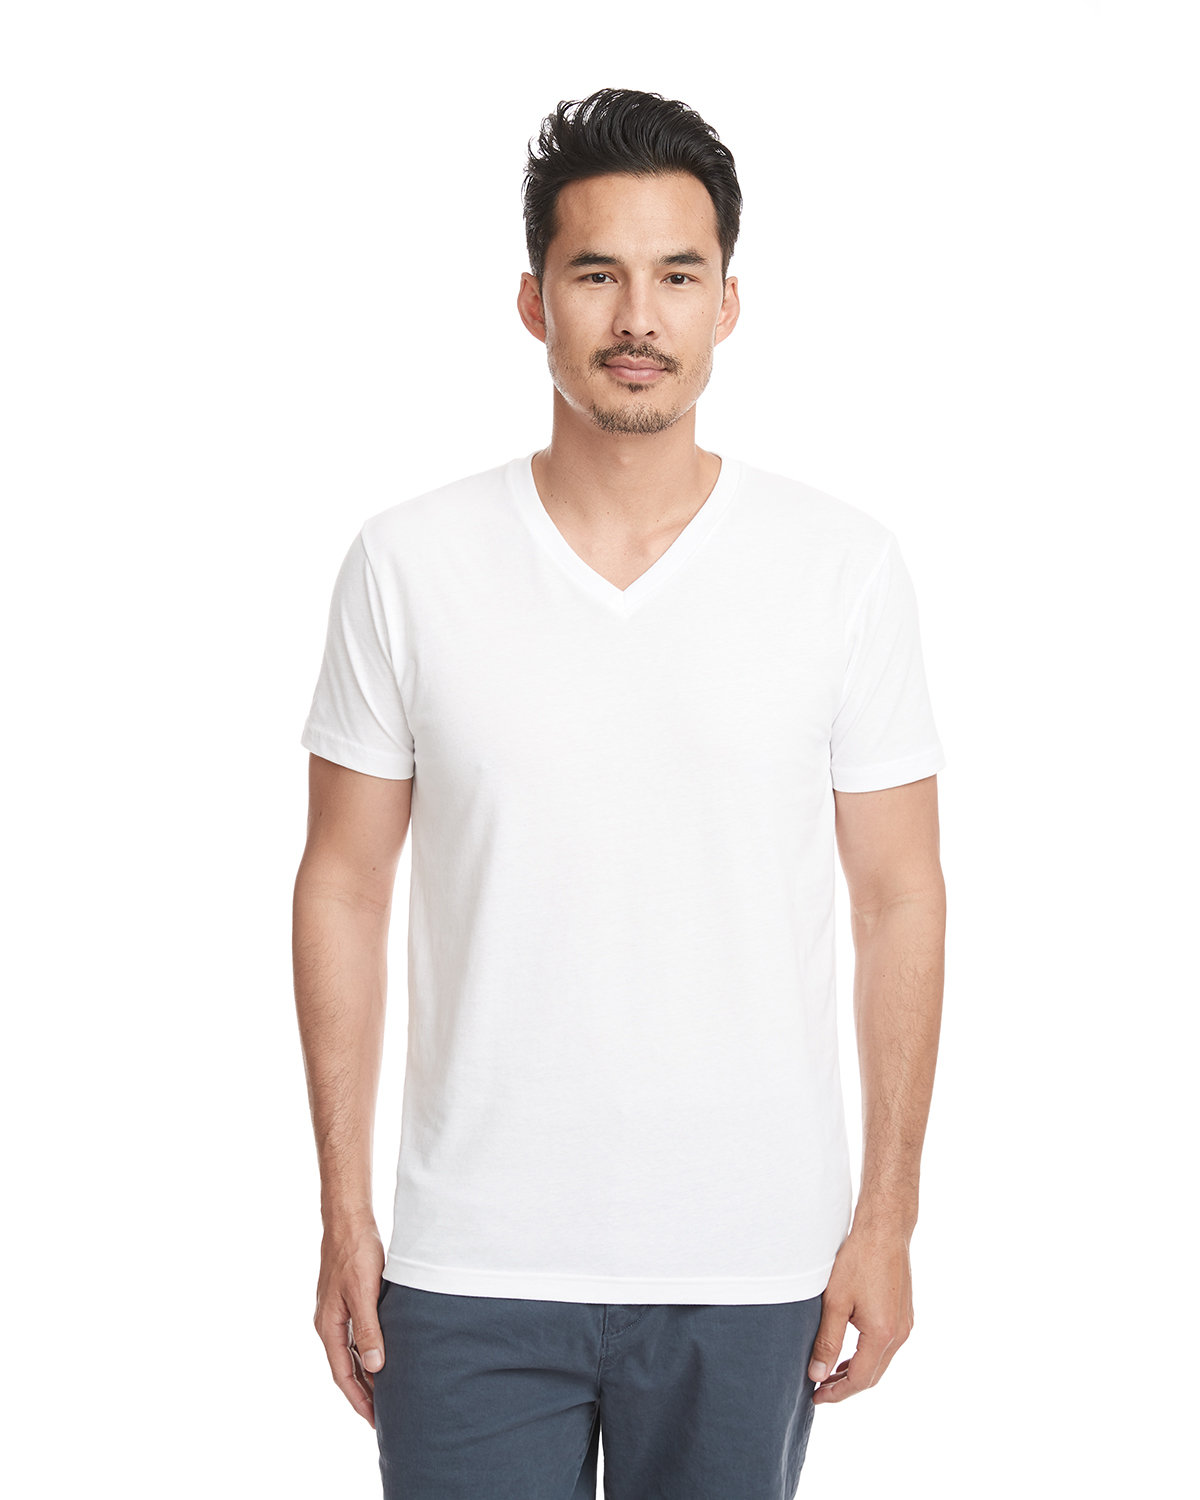 Next Level Men's Sueded V-Neck T-Shirt WHITE 